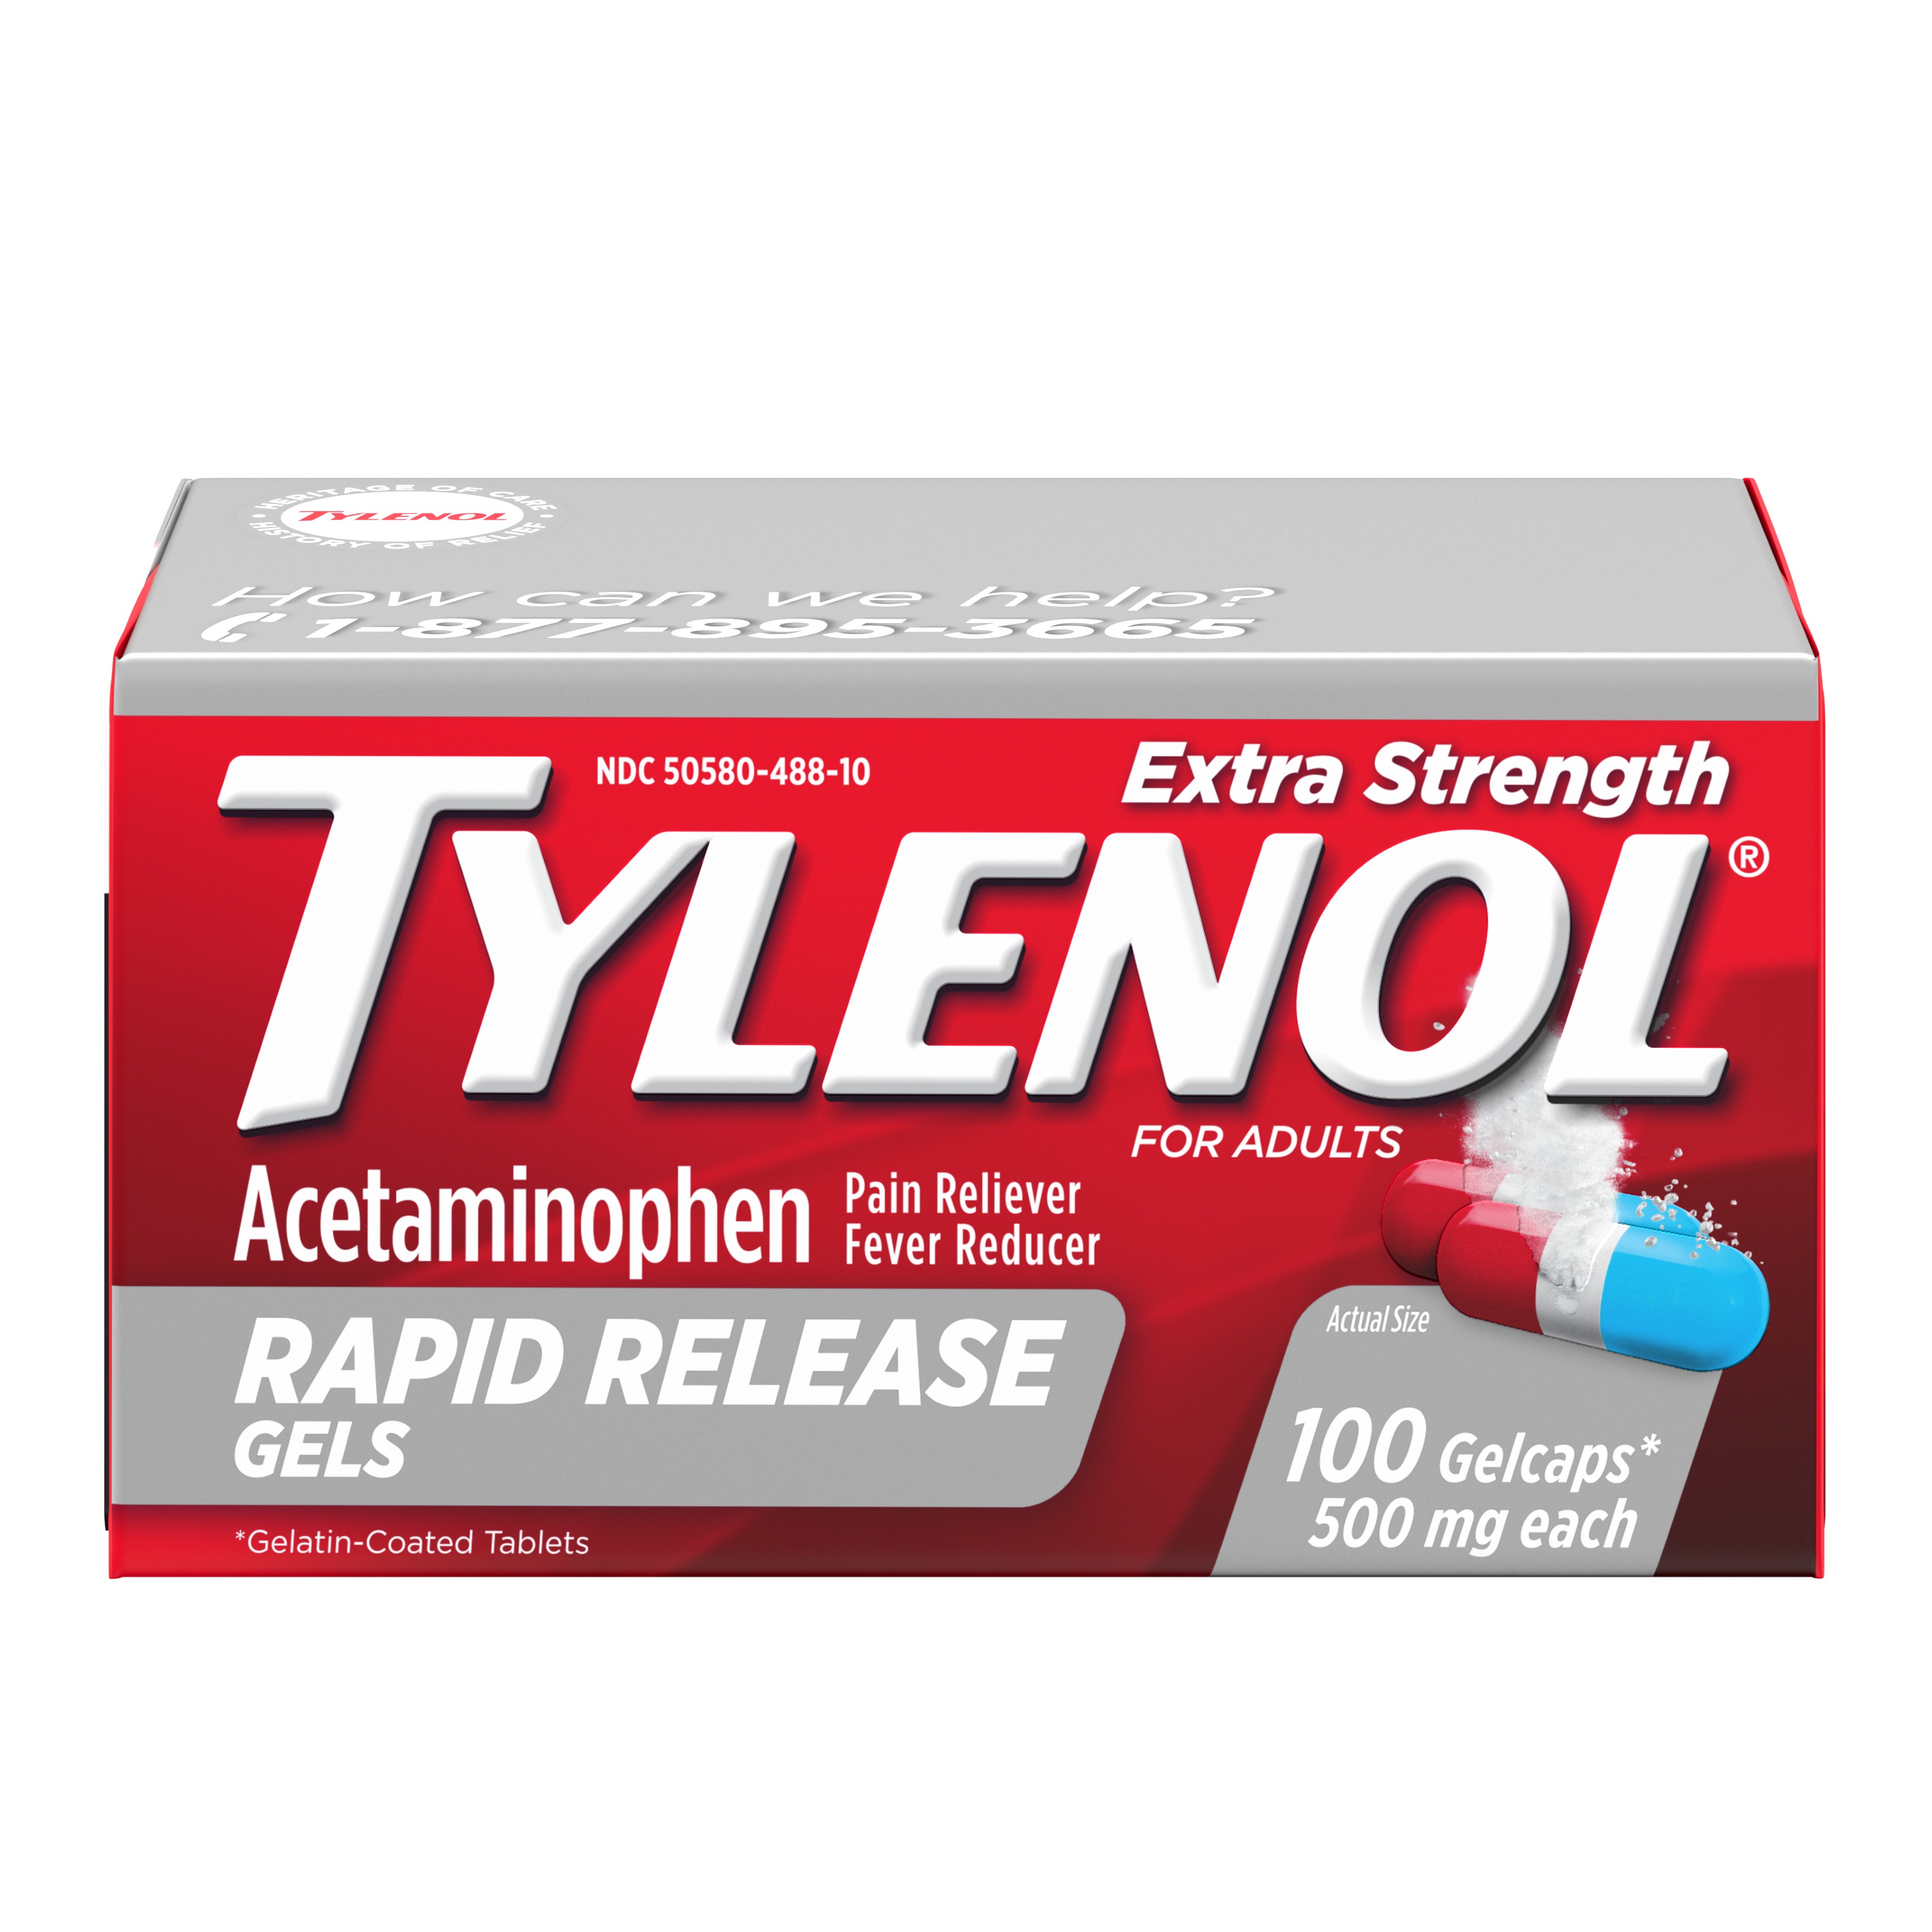 Tylenol is In-Stock at Walmart...